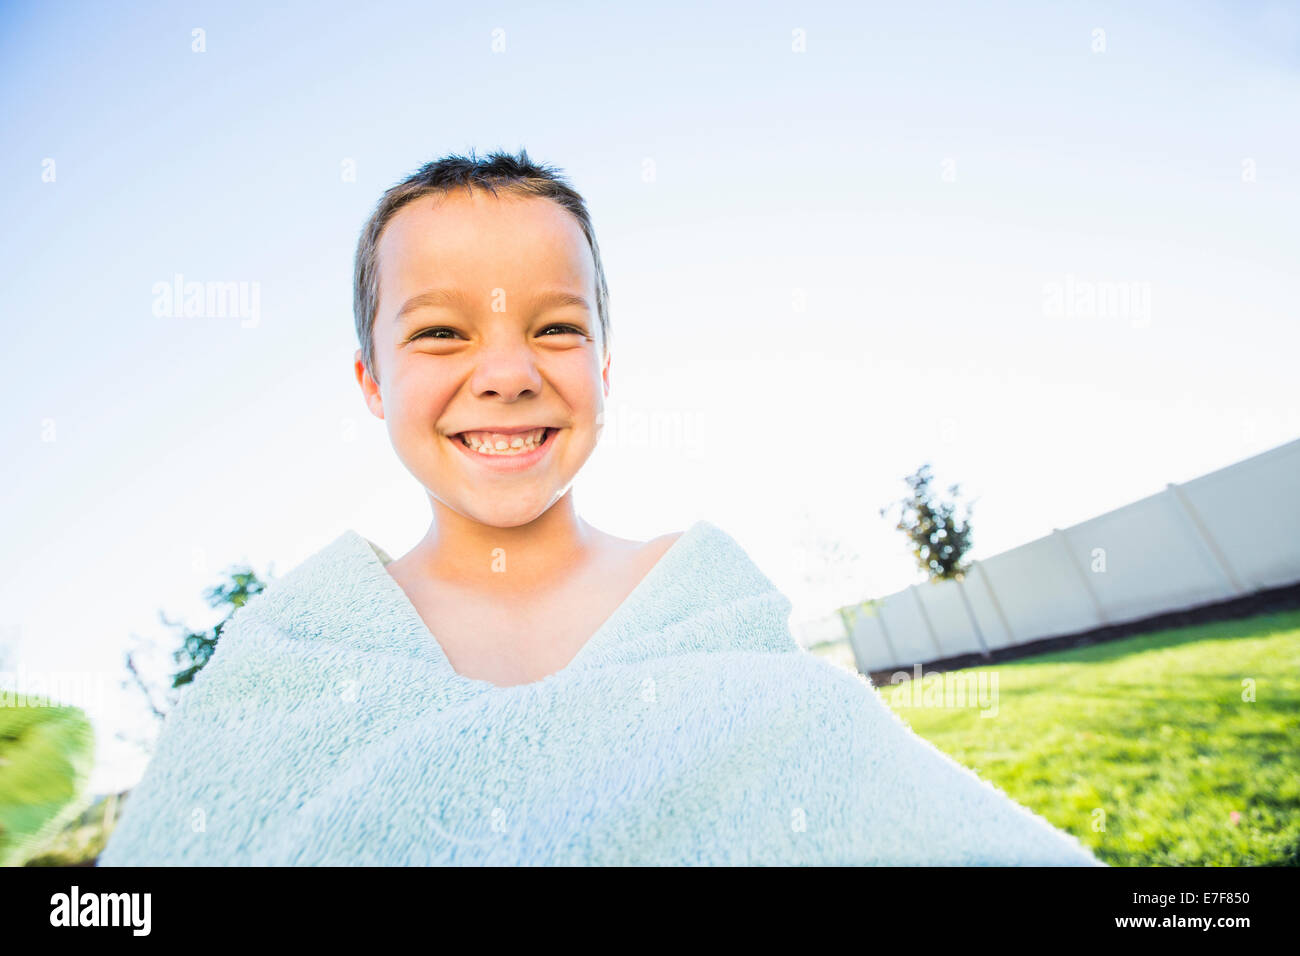 Caucasian boy playing with towel in backyard Stock Photo